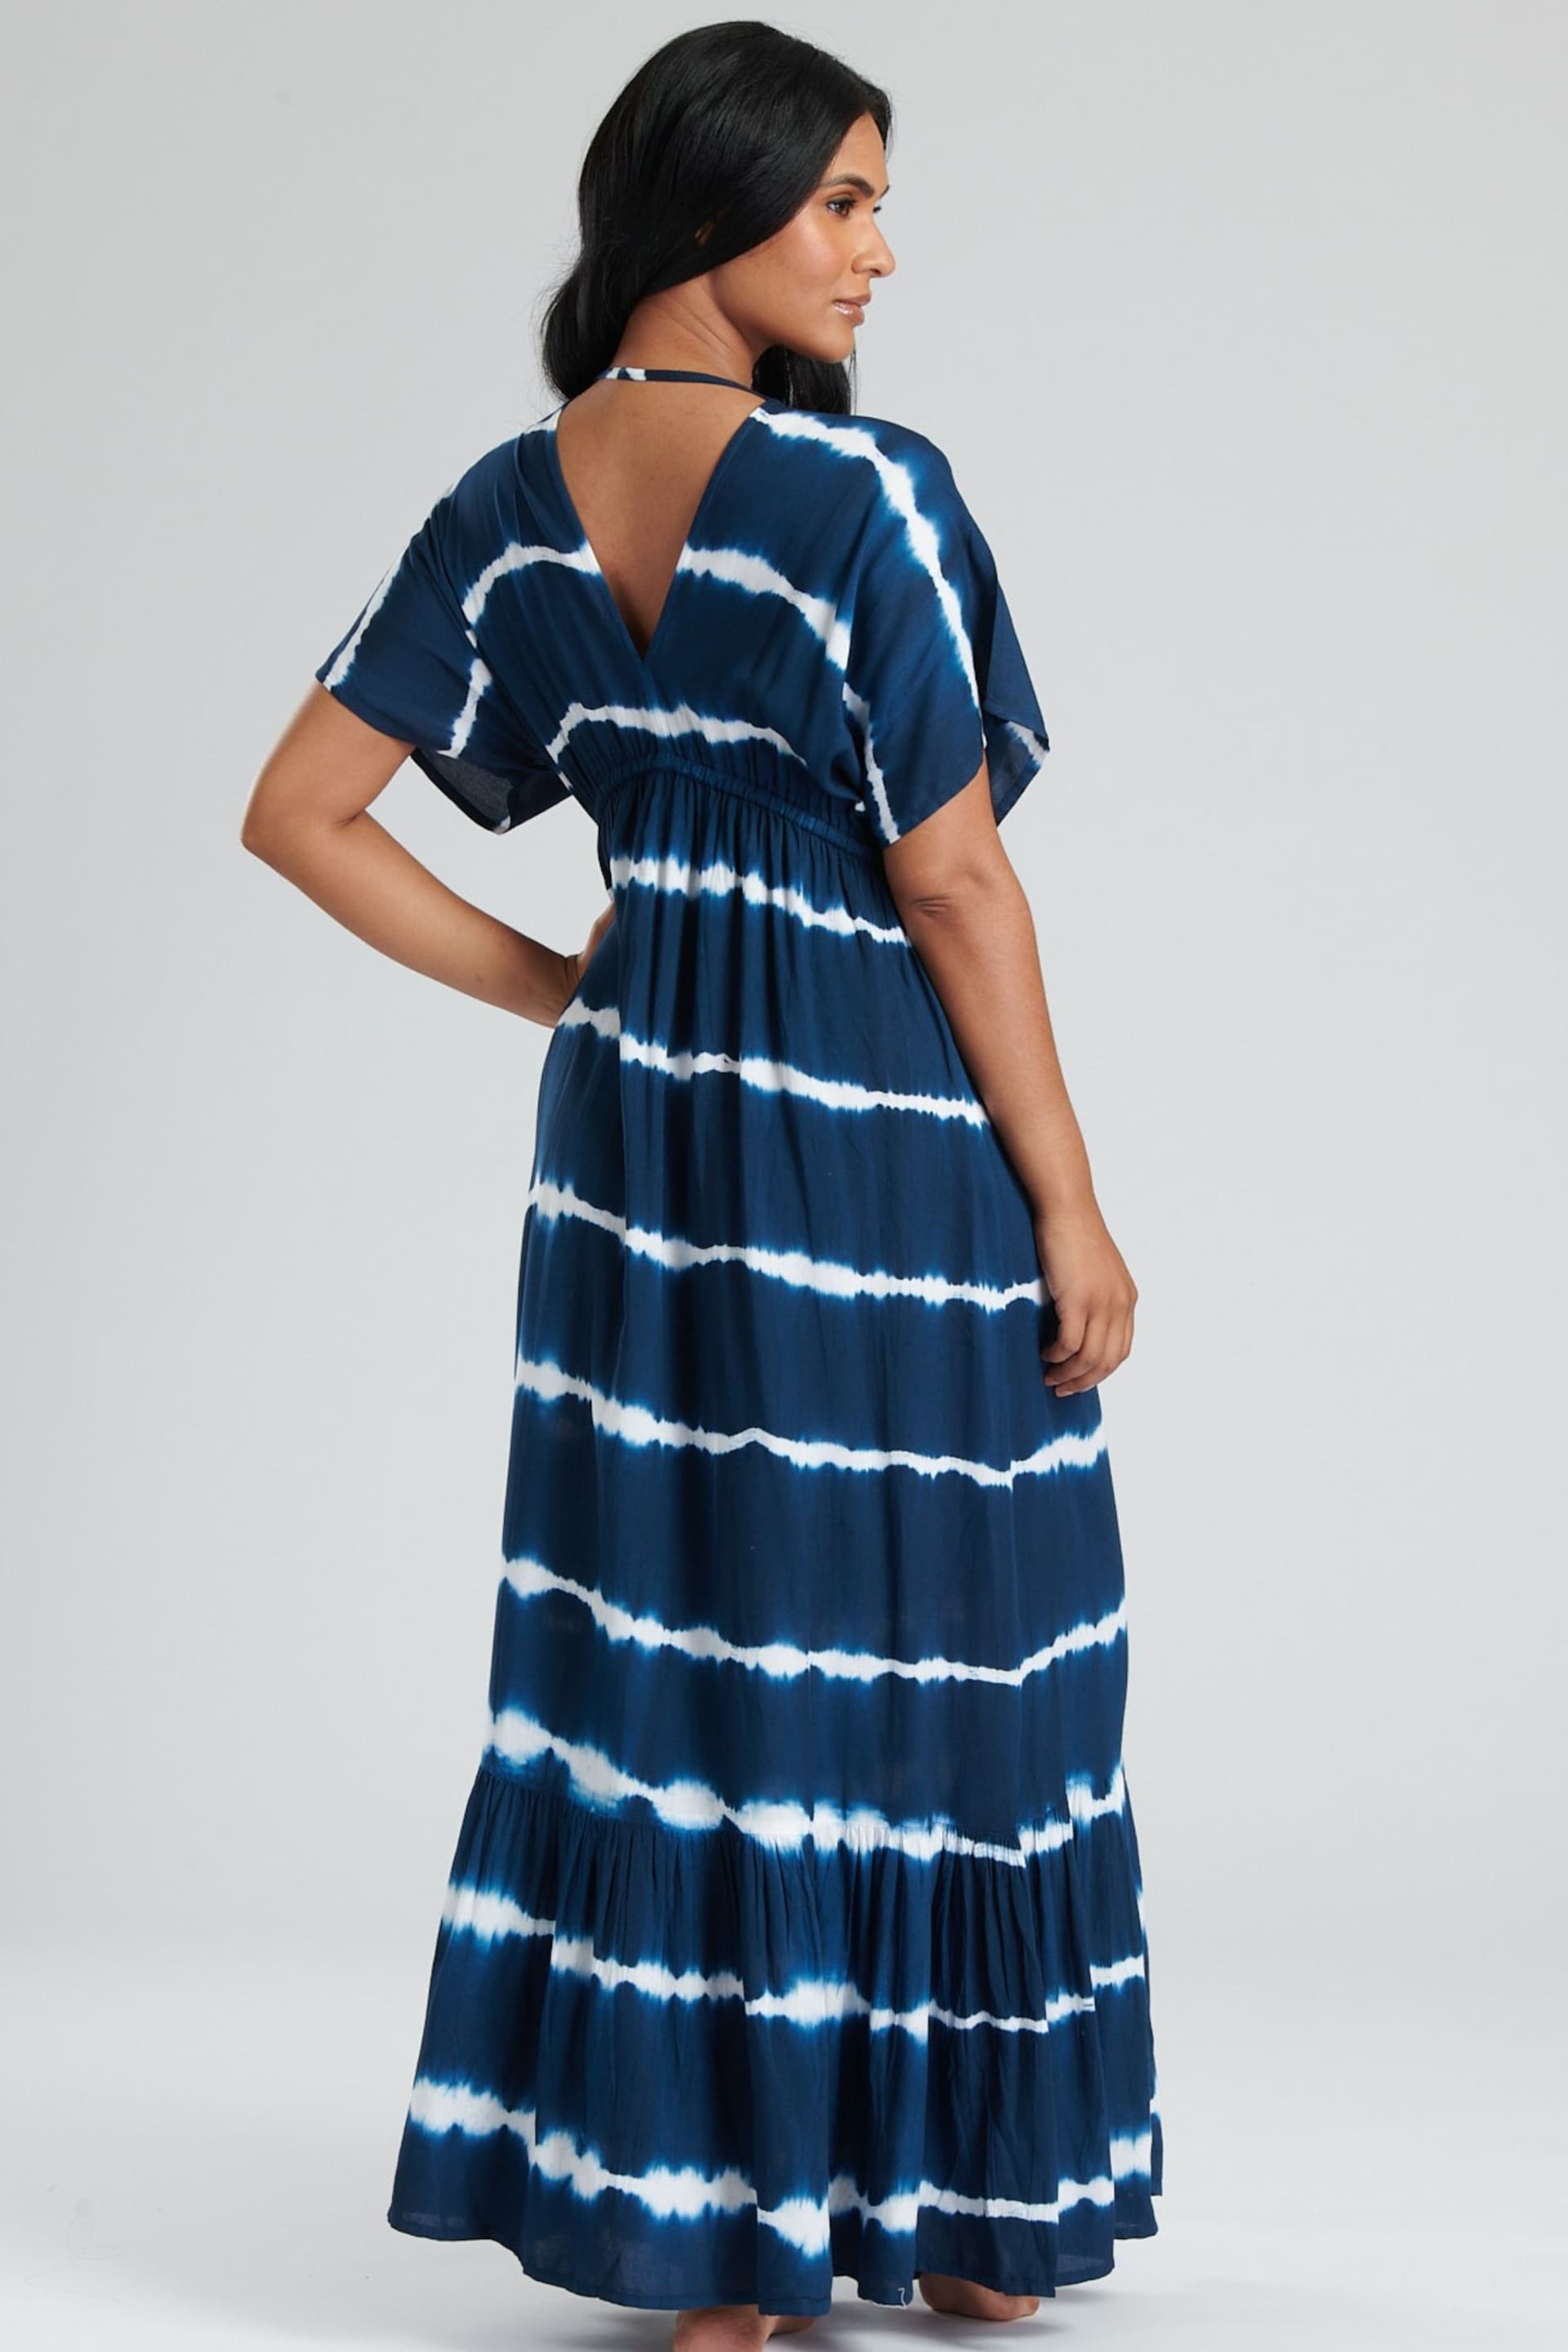 South Beach Blue V-Neck Tie Dye Maxi Dress - Image 2 of 5